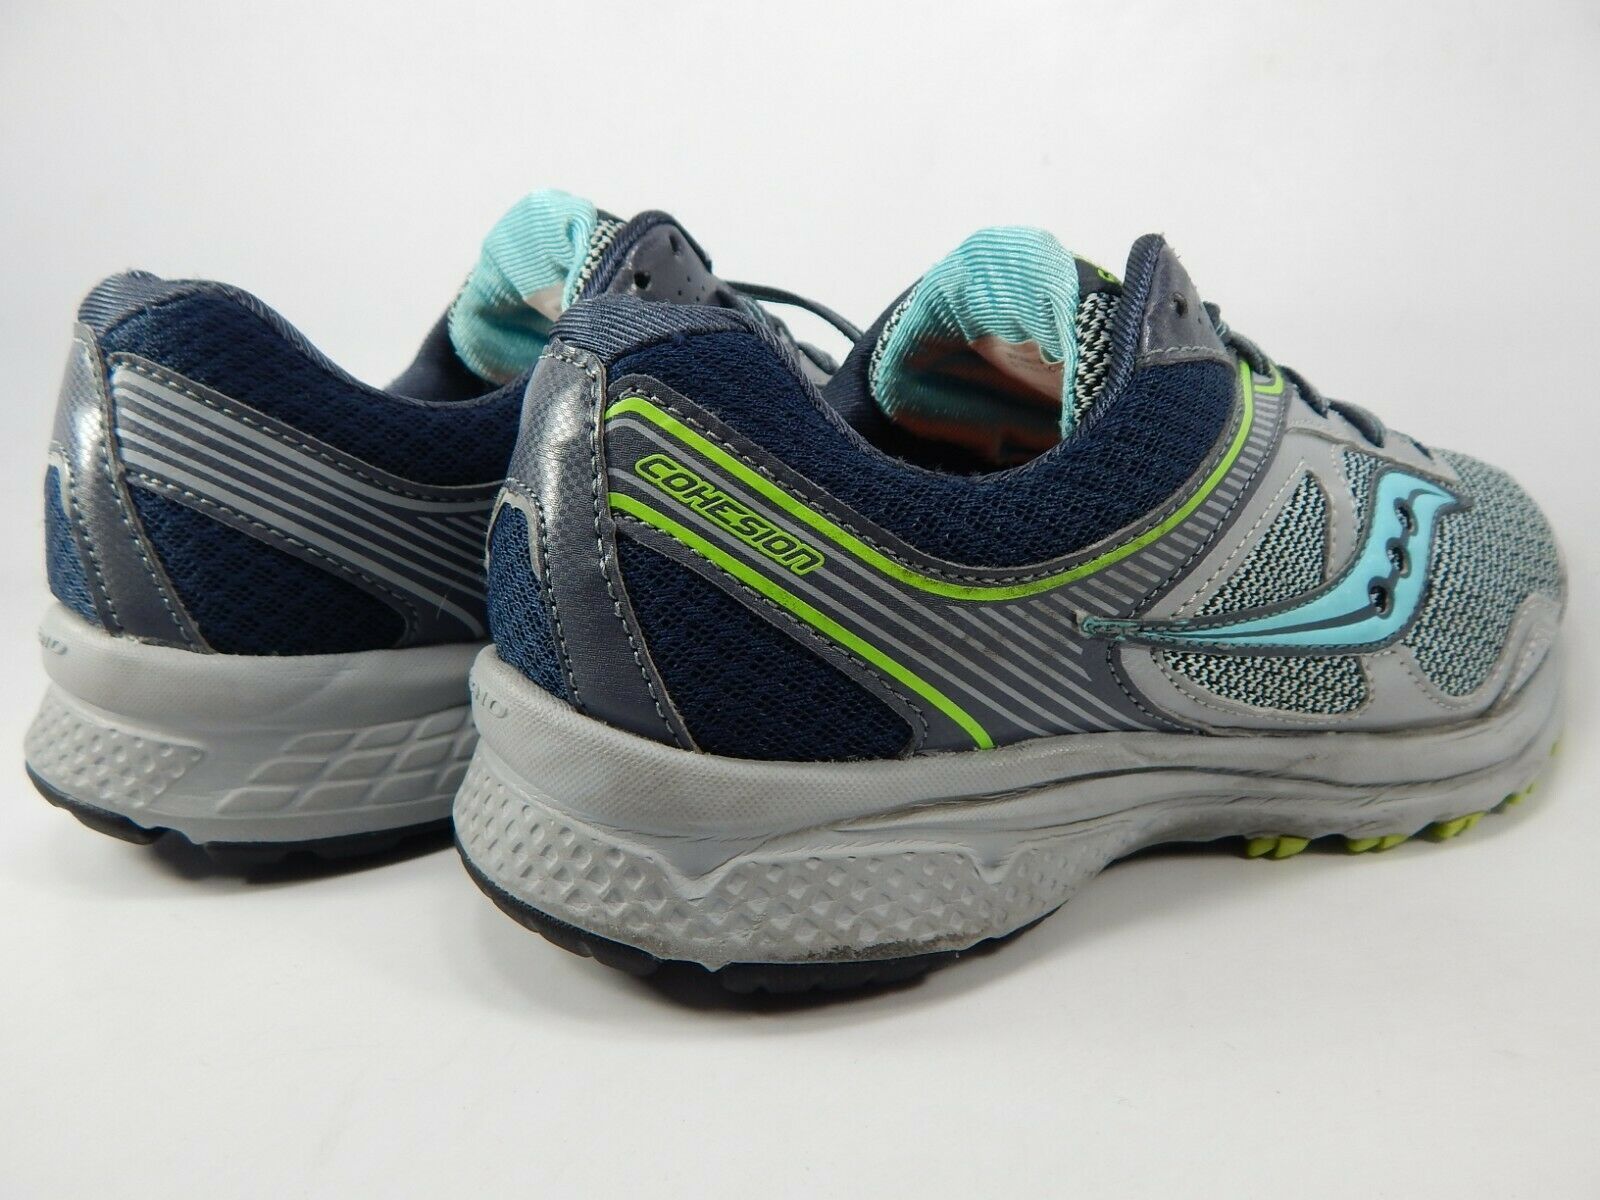 Saucony Cohesion 10 Size 9 D (W) WIDE EU 40.5 Women's Running Shoes ...